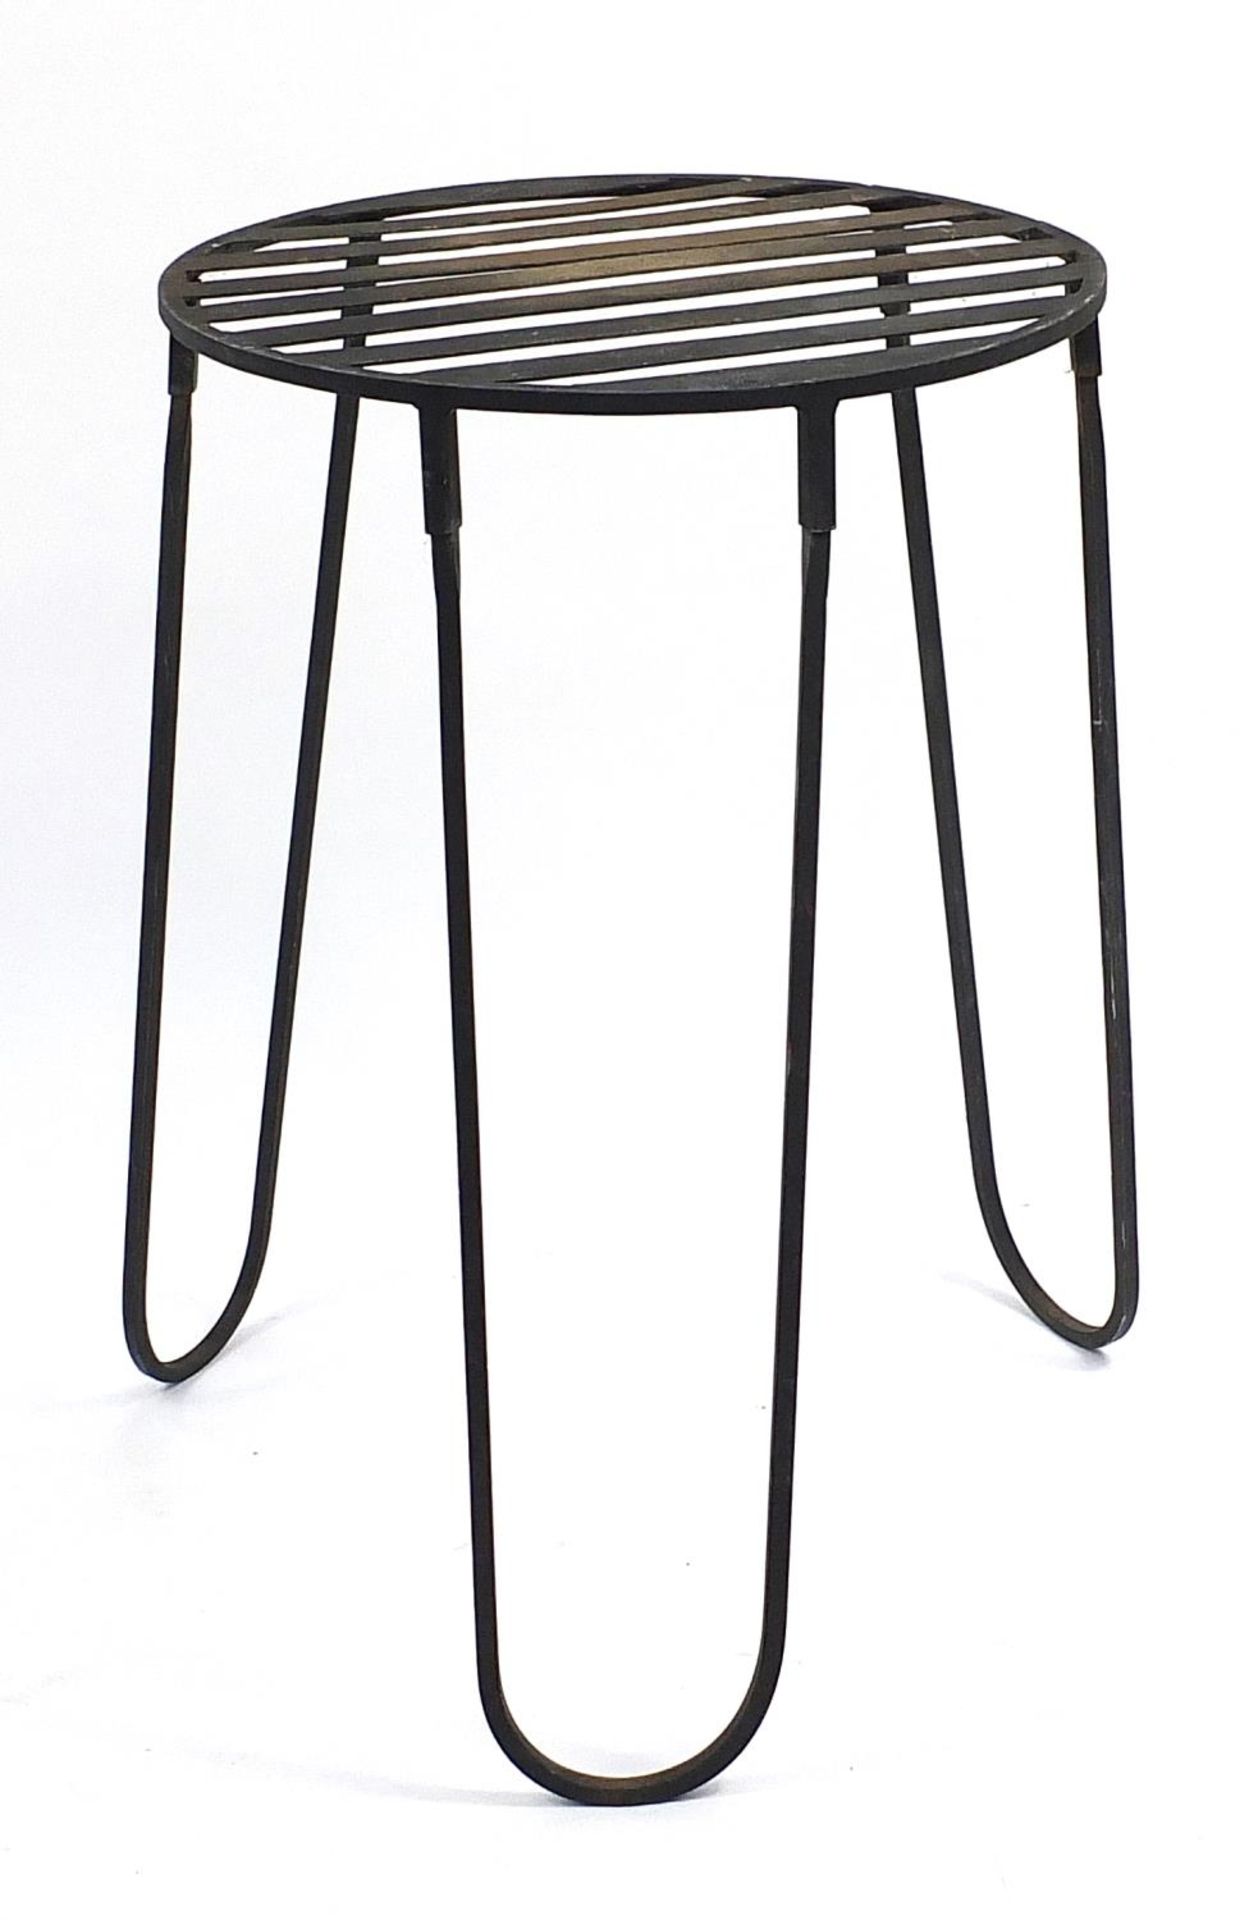 Stylish wrought iron garden table, 78cm high - Bild 2 aus 2